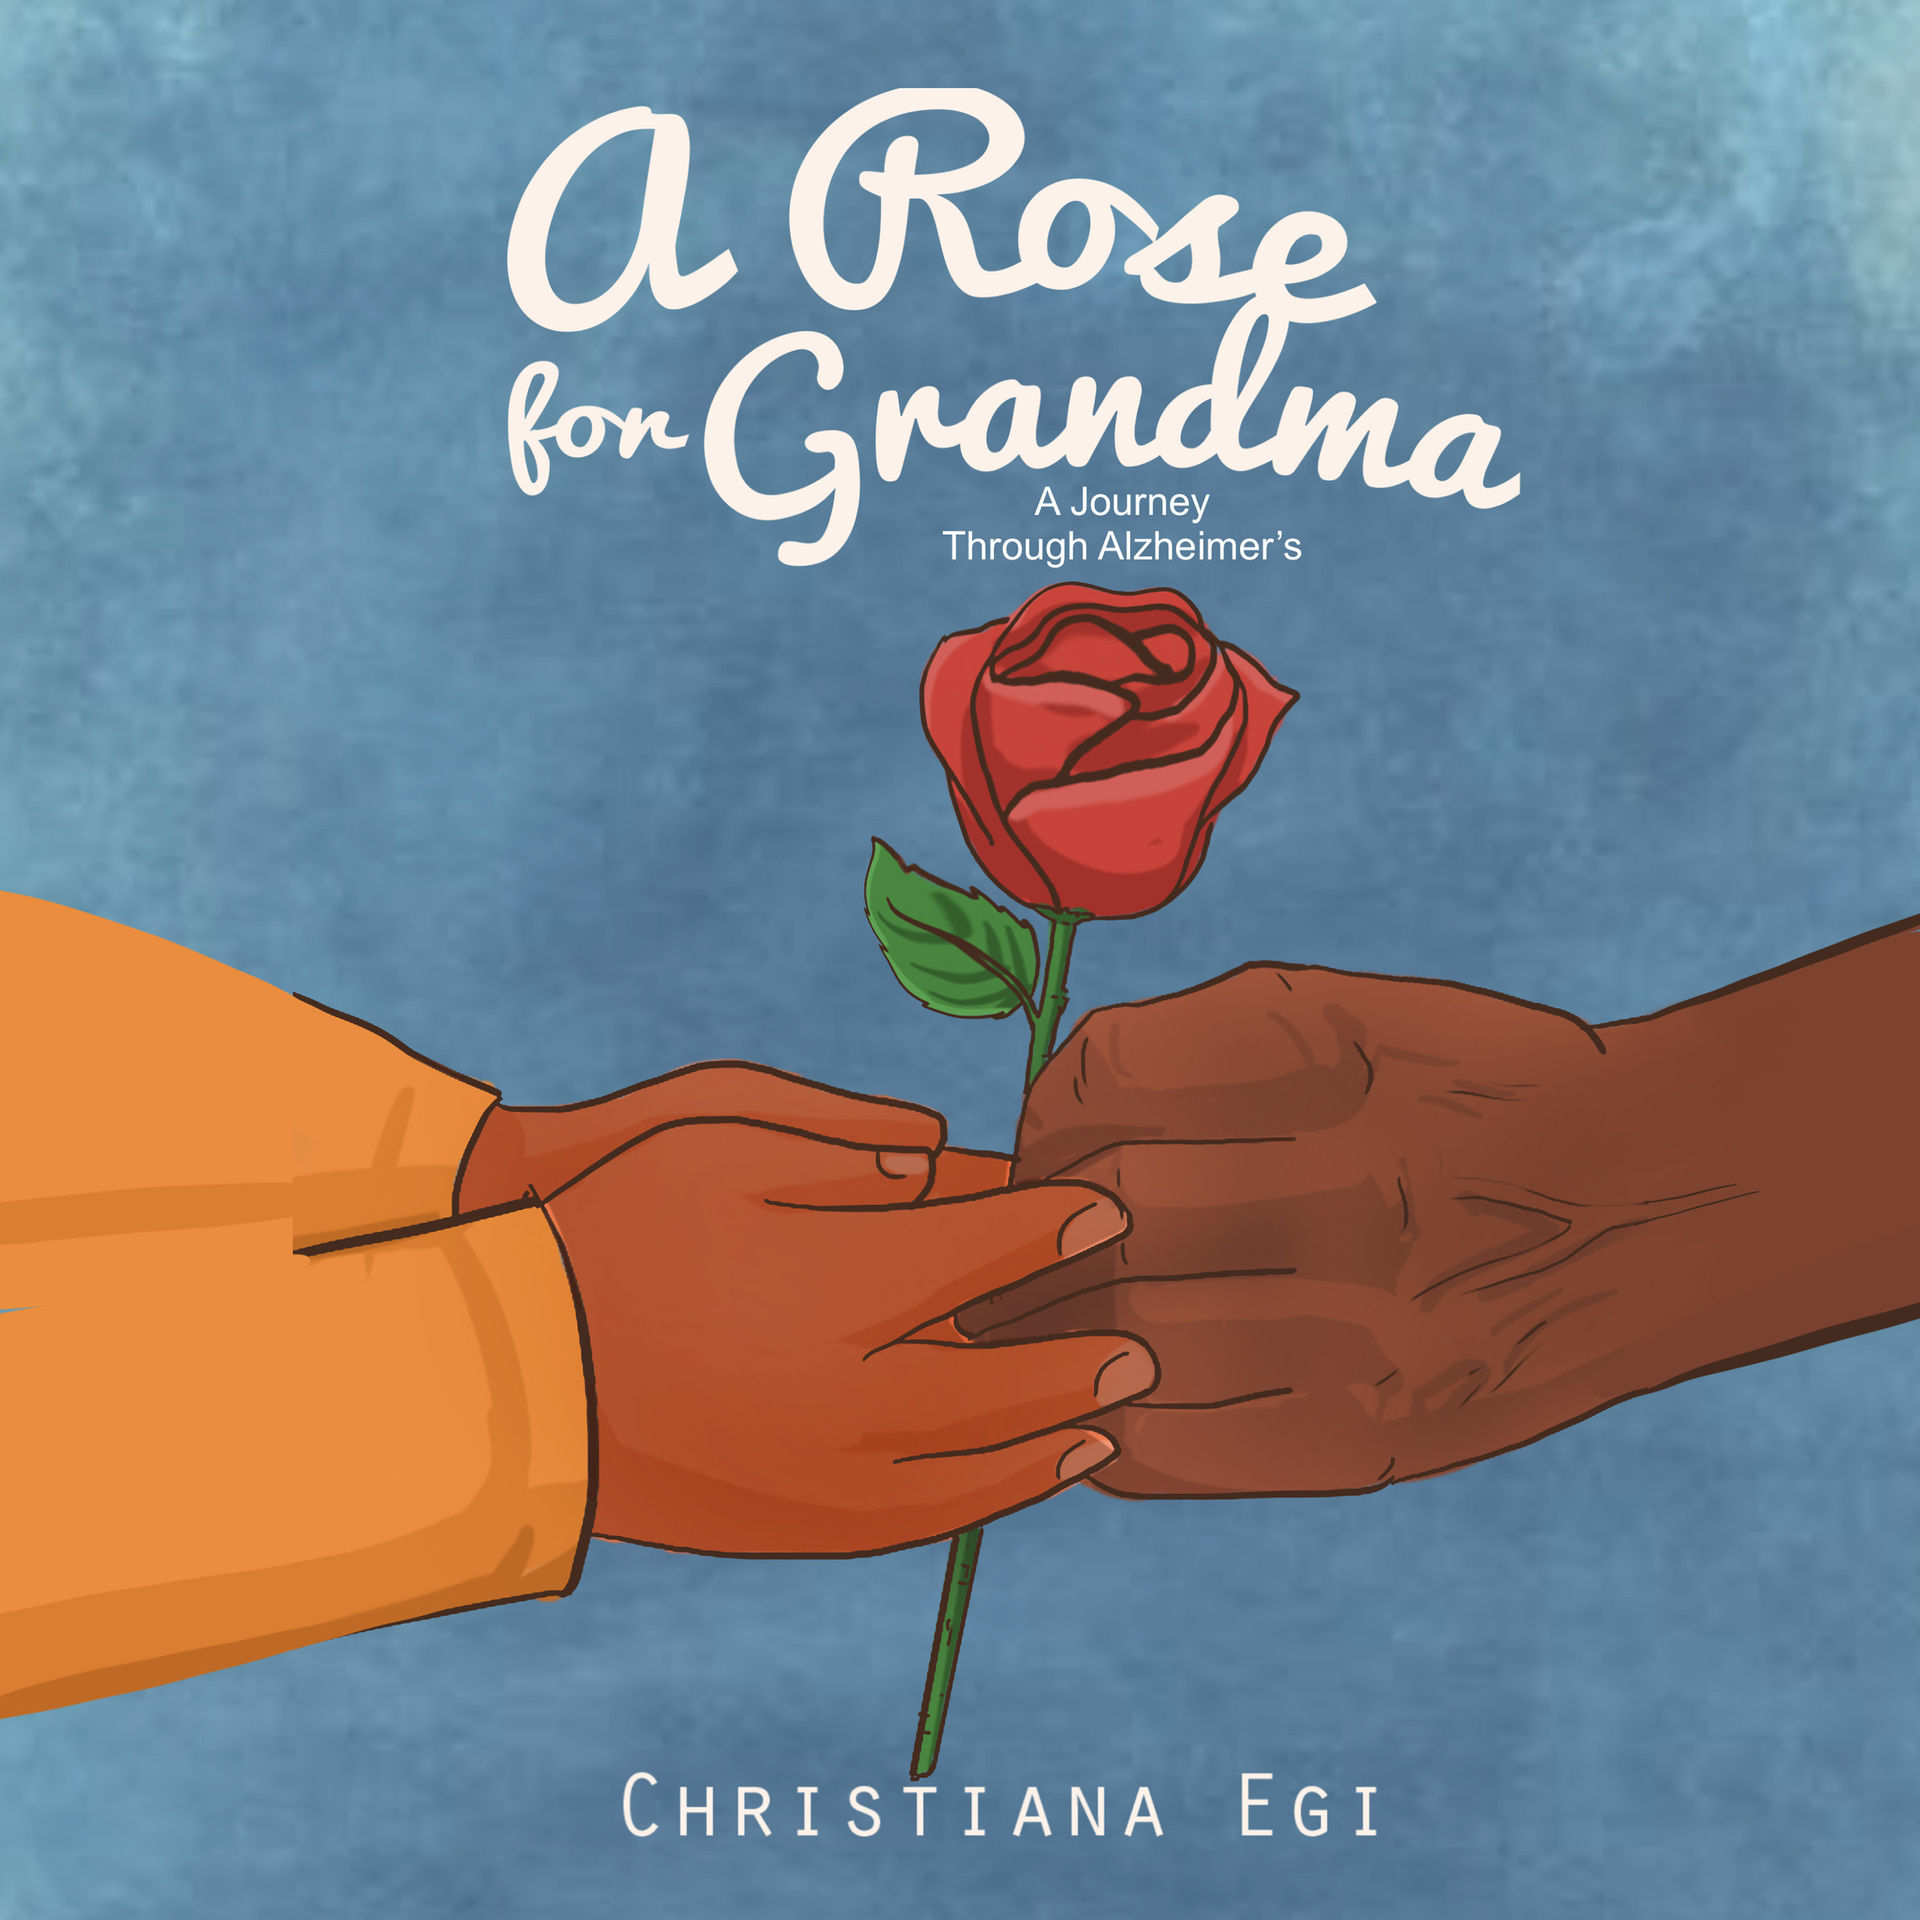 A Rose for Grandma